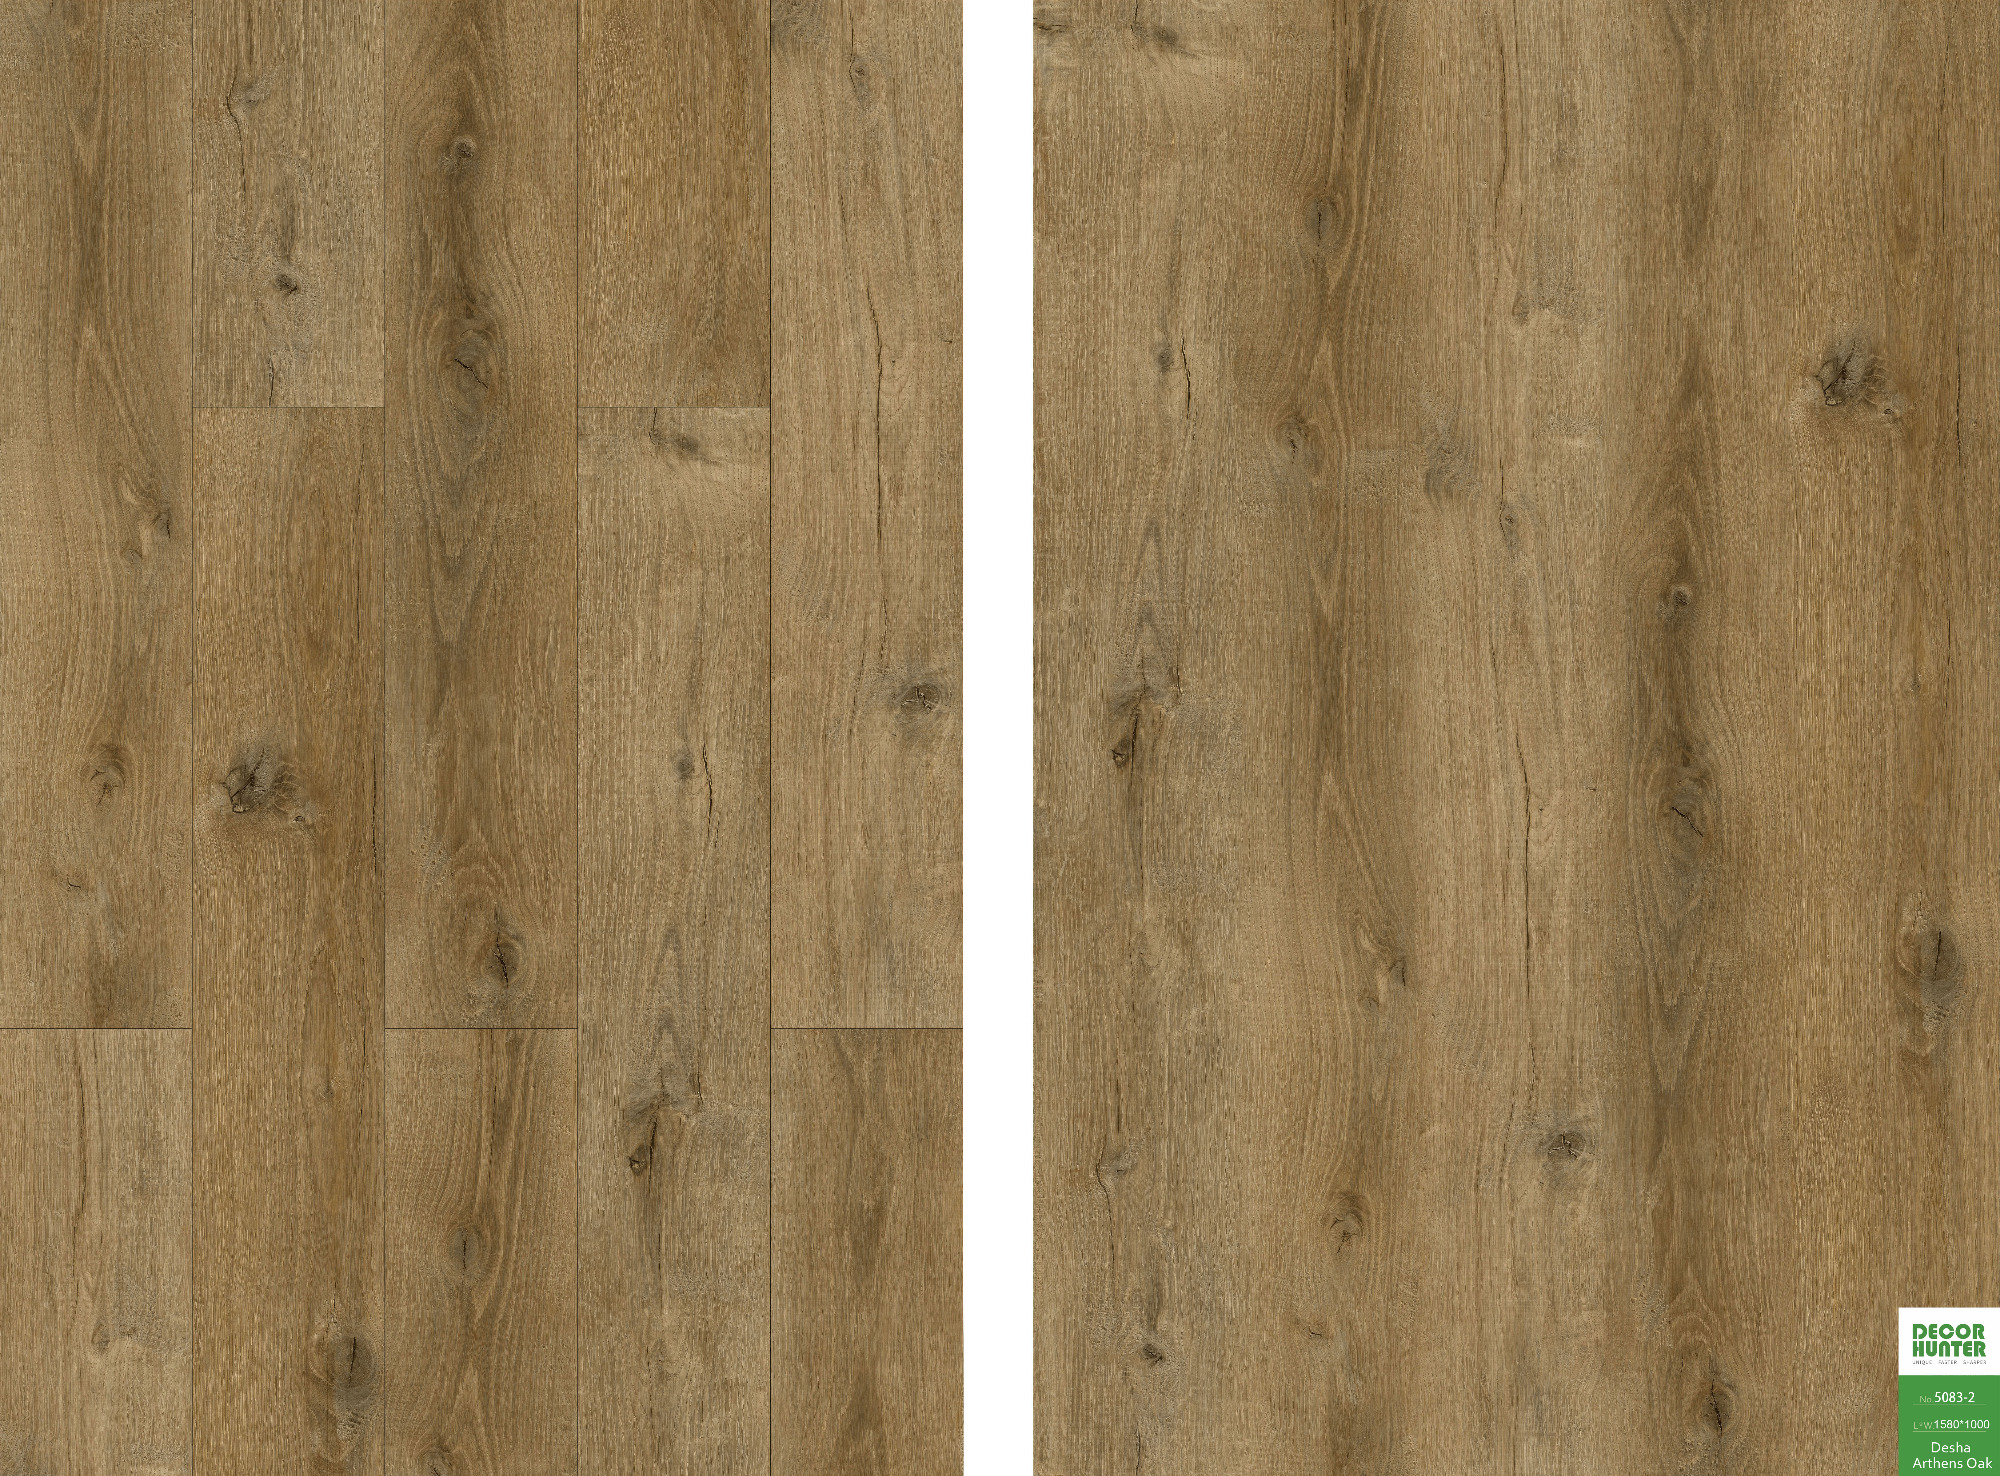 5083 Desha Arthens Oak｜Wood Grain Vinyl Flooring Film